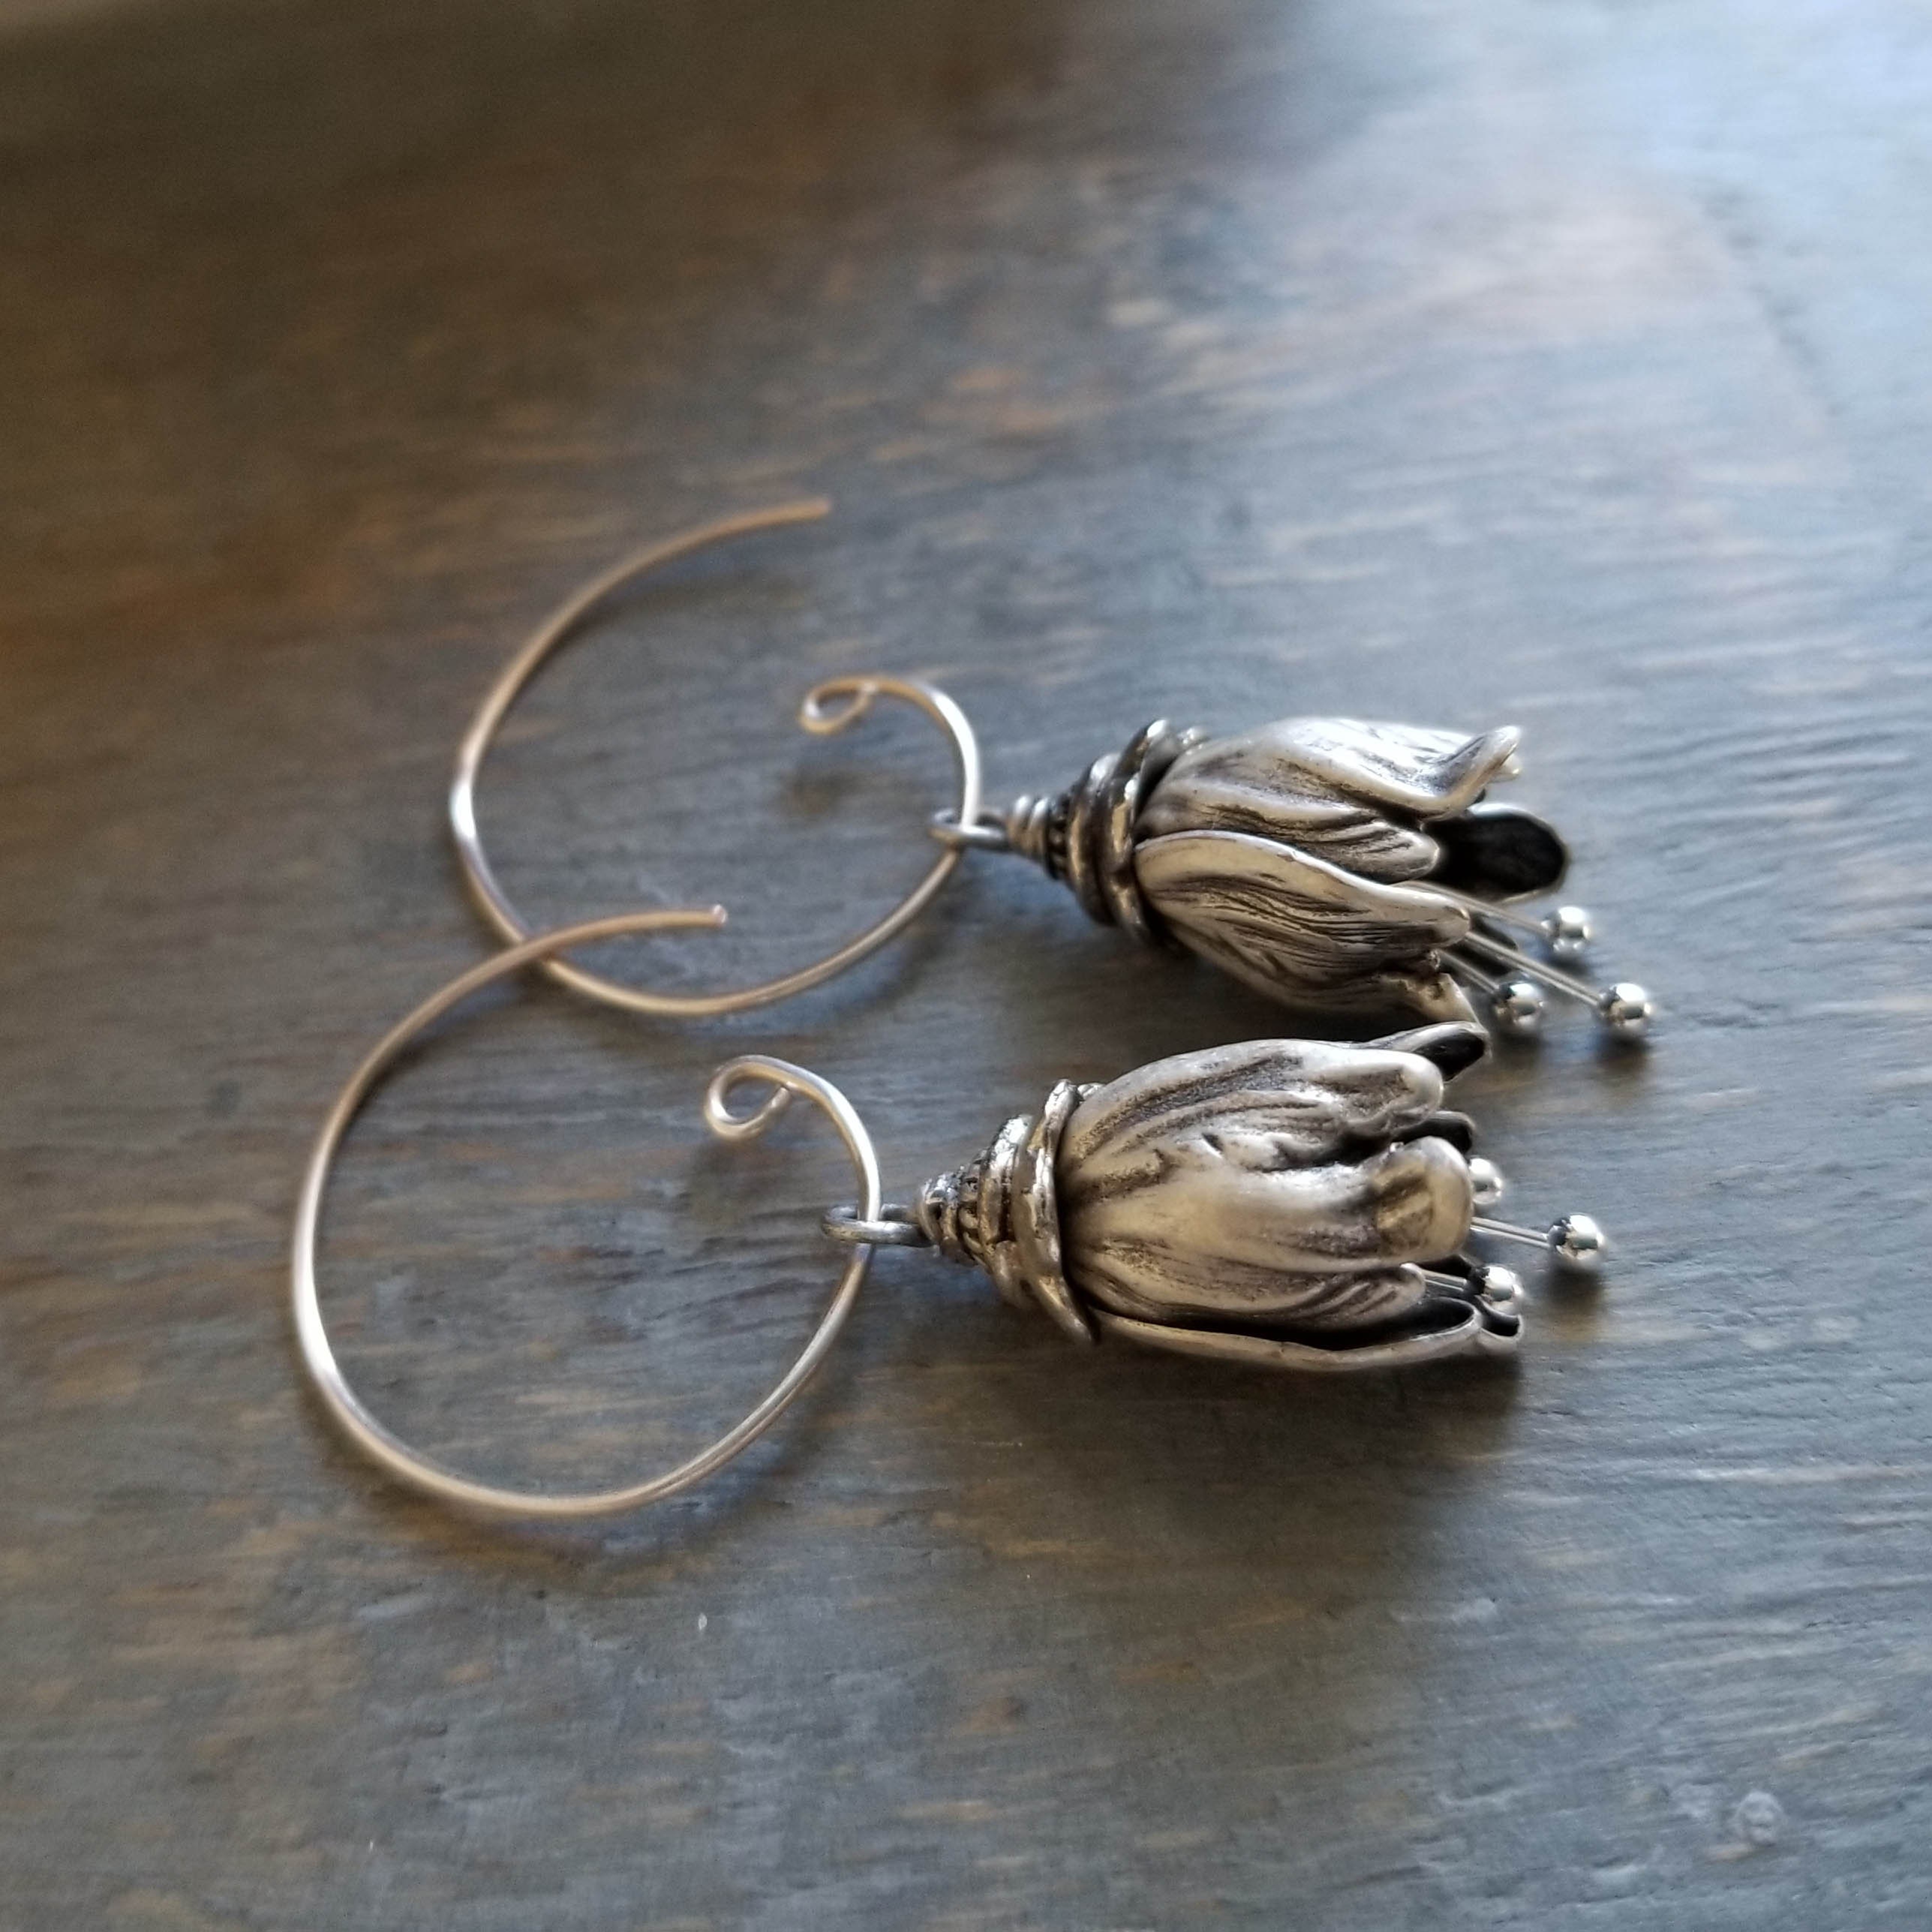 925 Silver Bell Stud Earrings by BeYindi